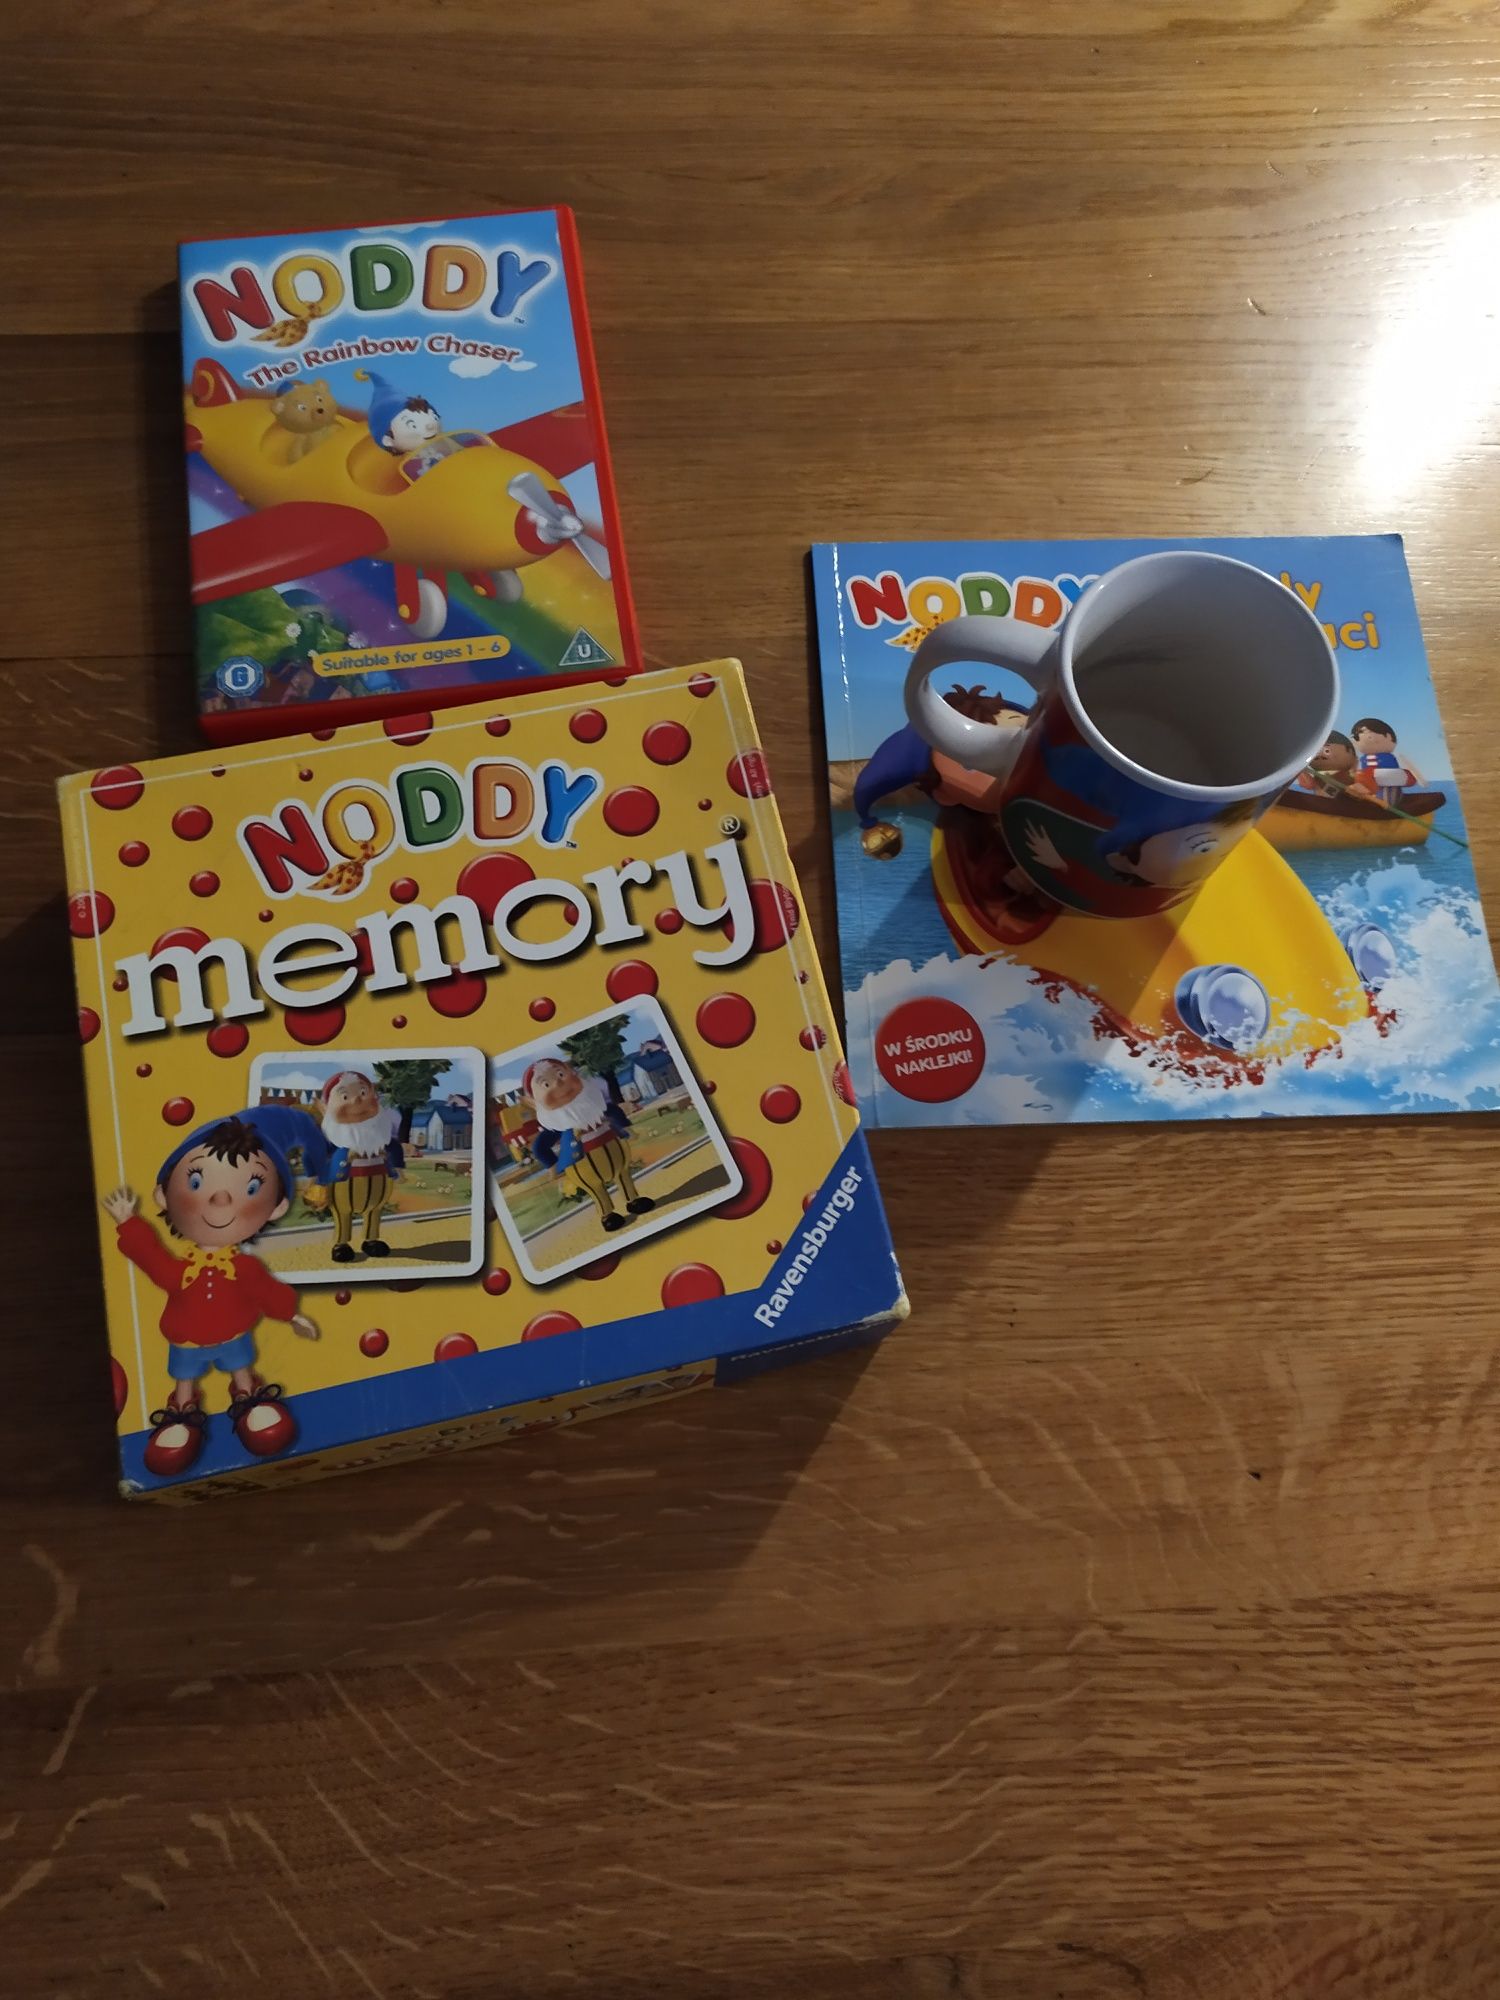 Noddy memory gra, książka, kubek,  bajka